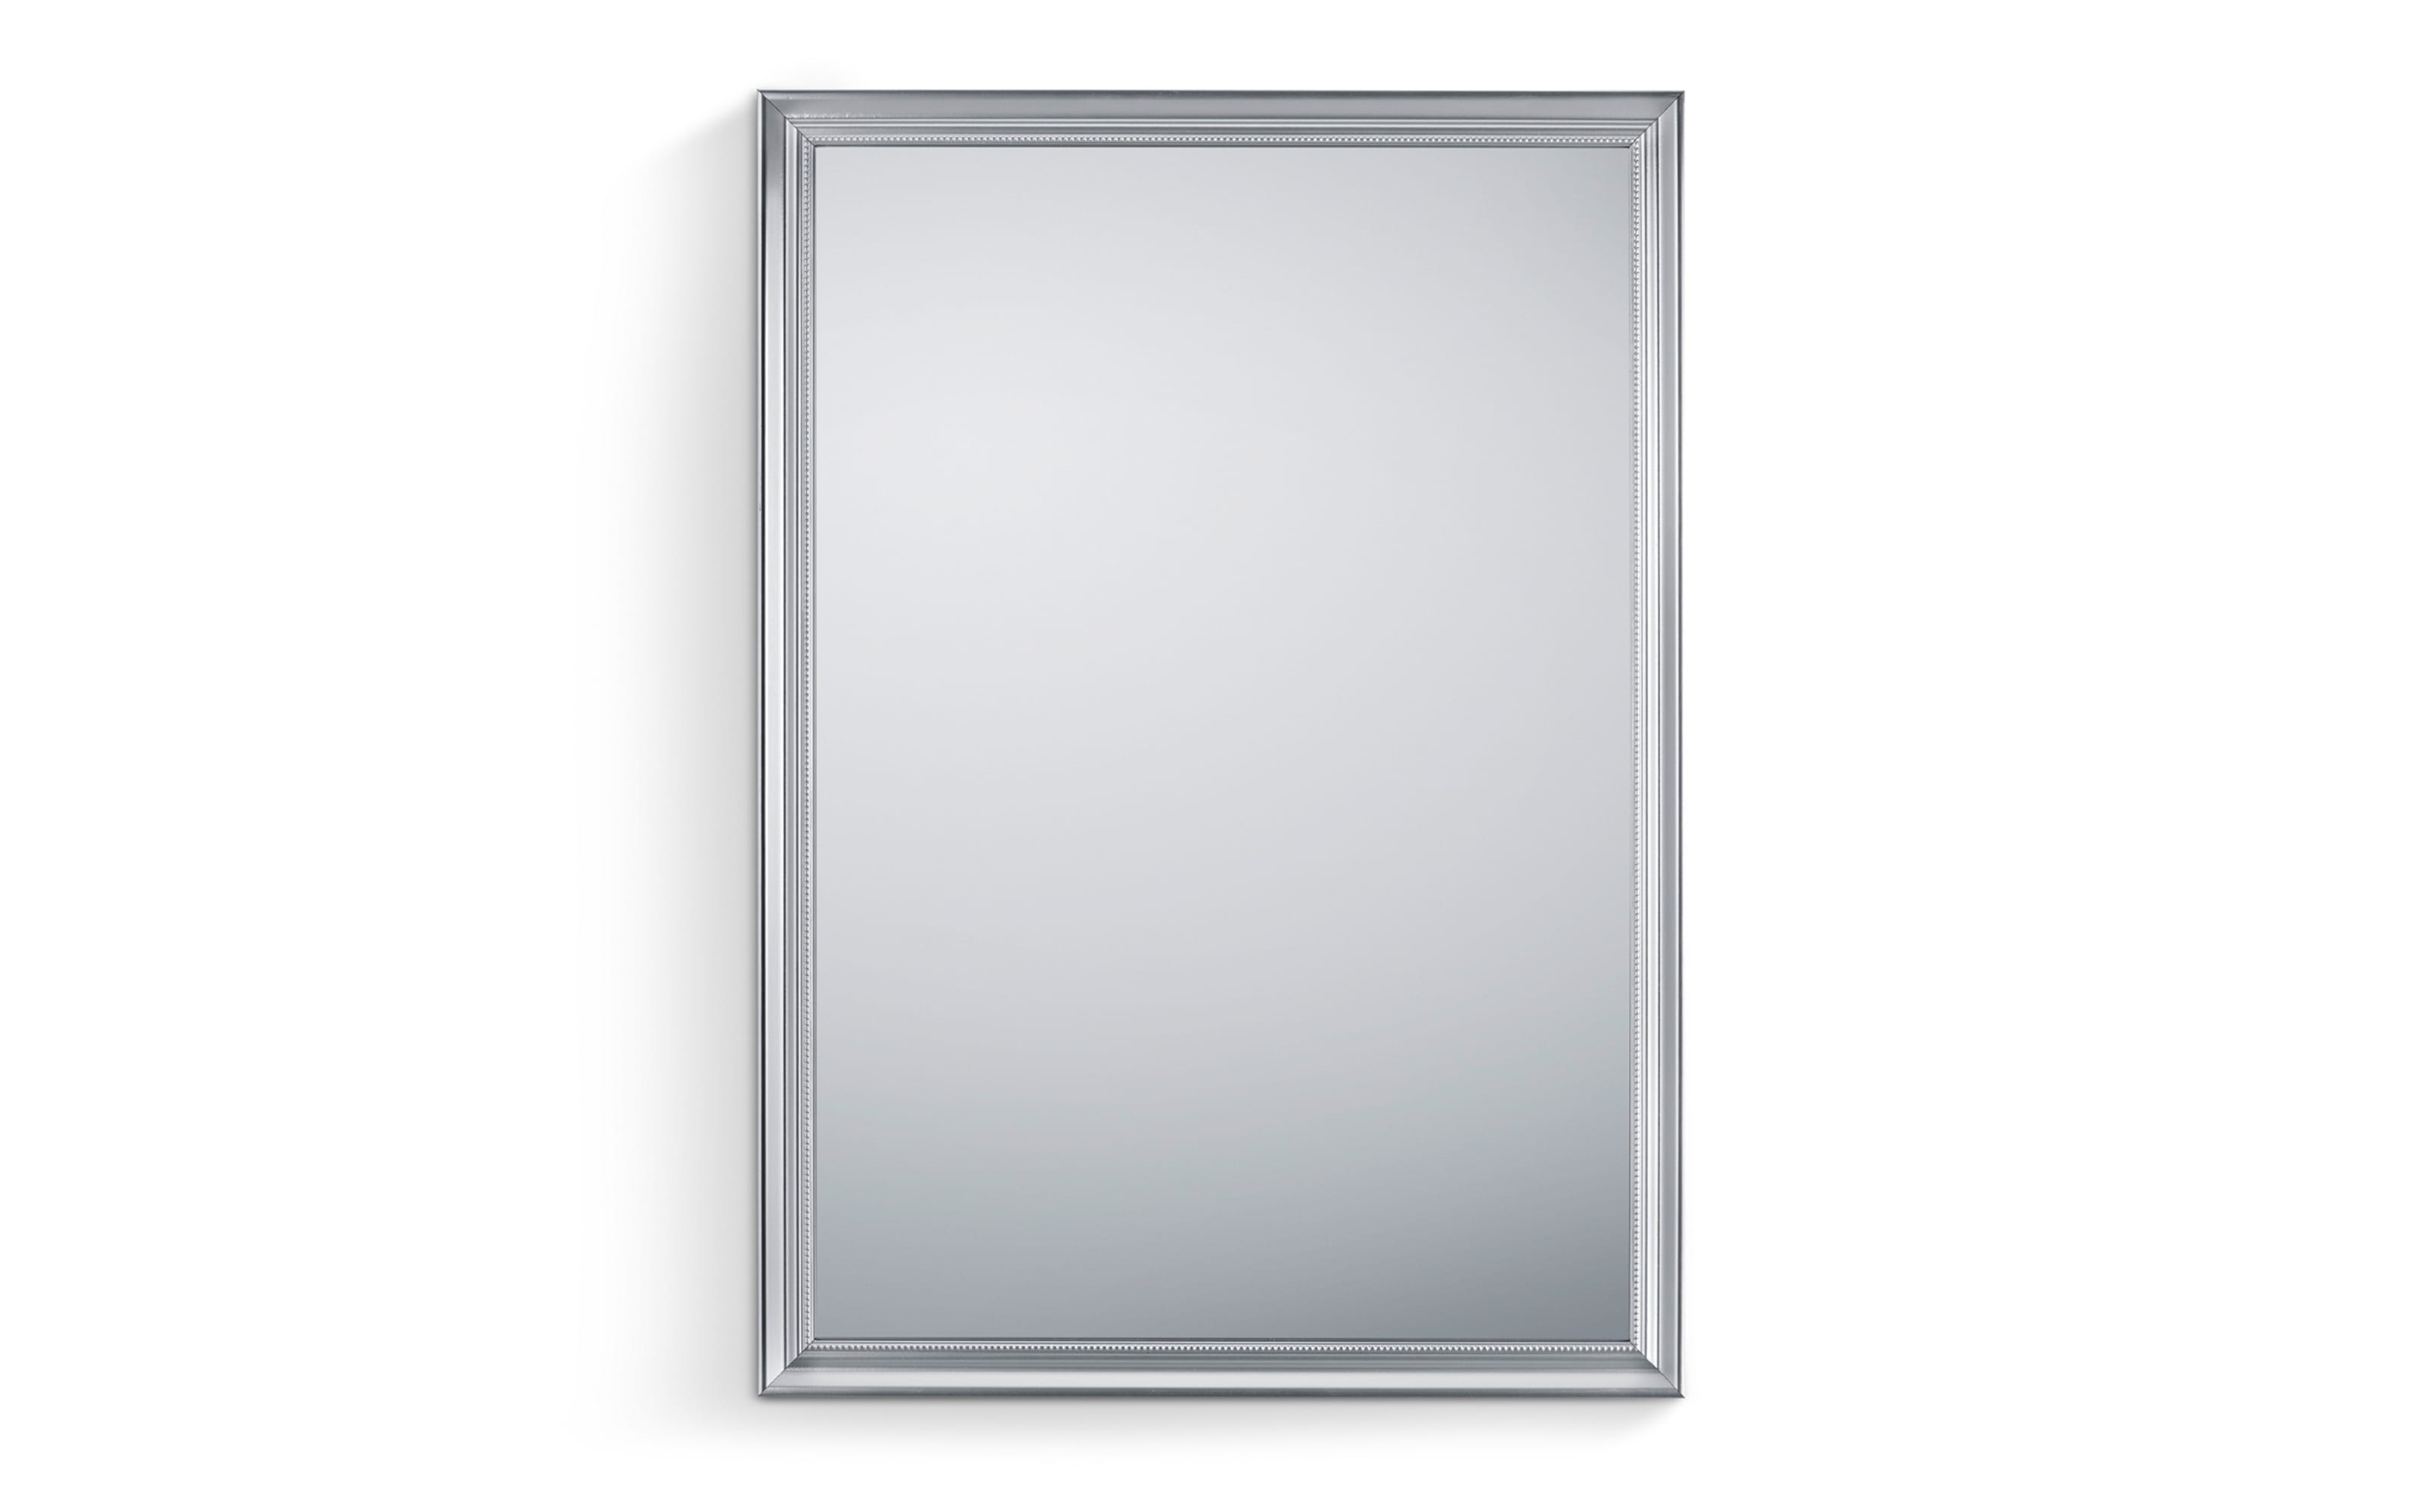 Rahmenspiegel Karina in silberfarbig, 50 x 70 cm